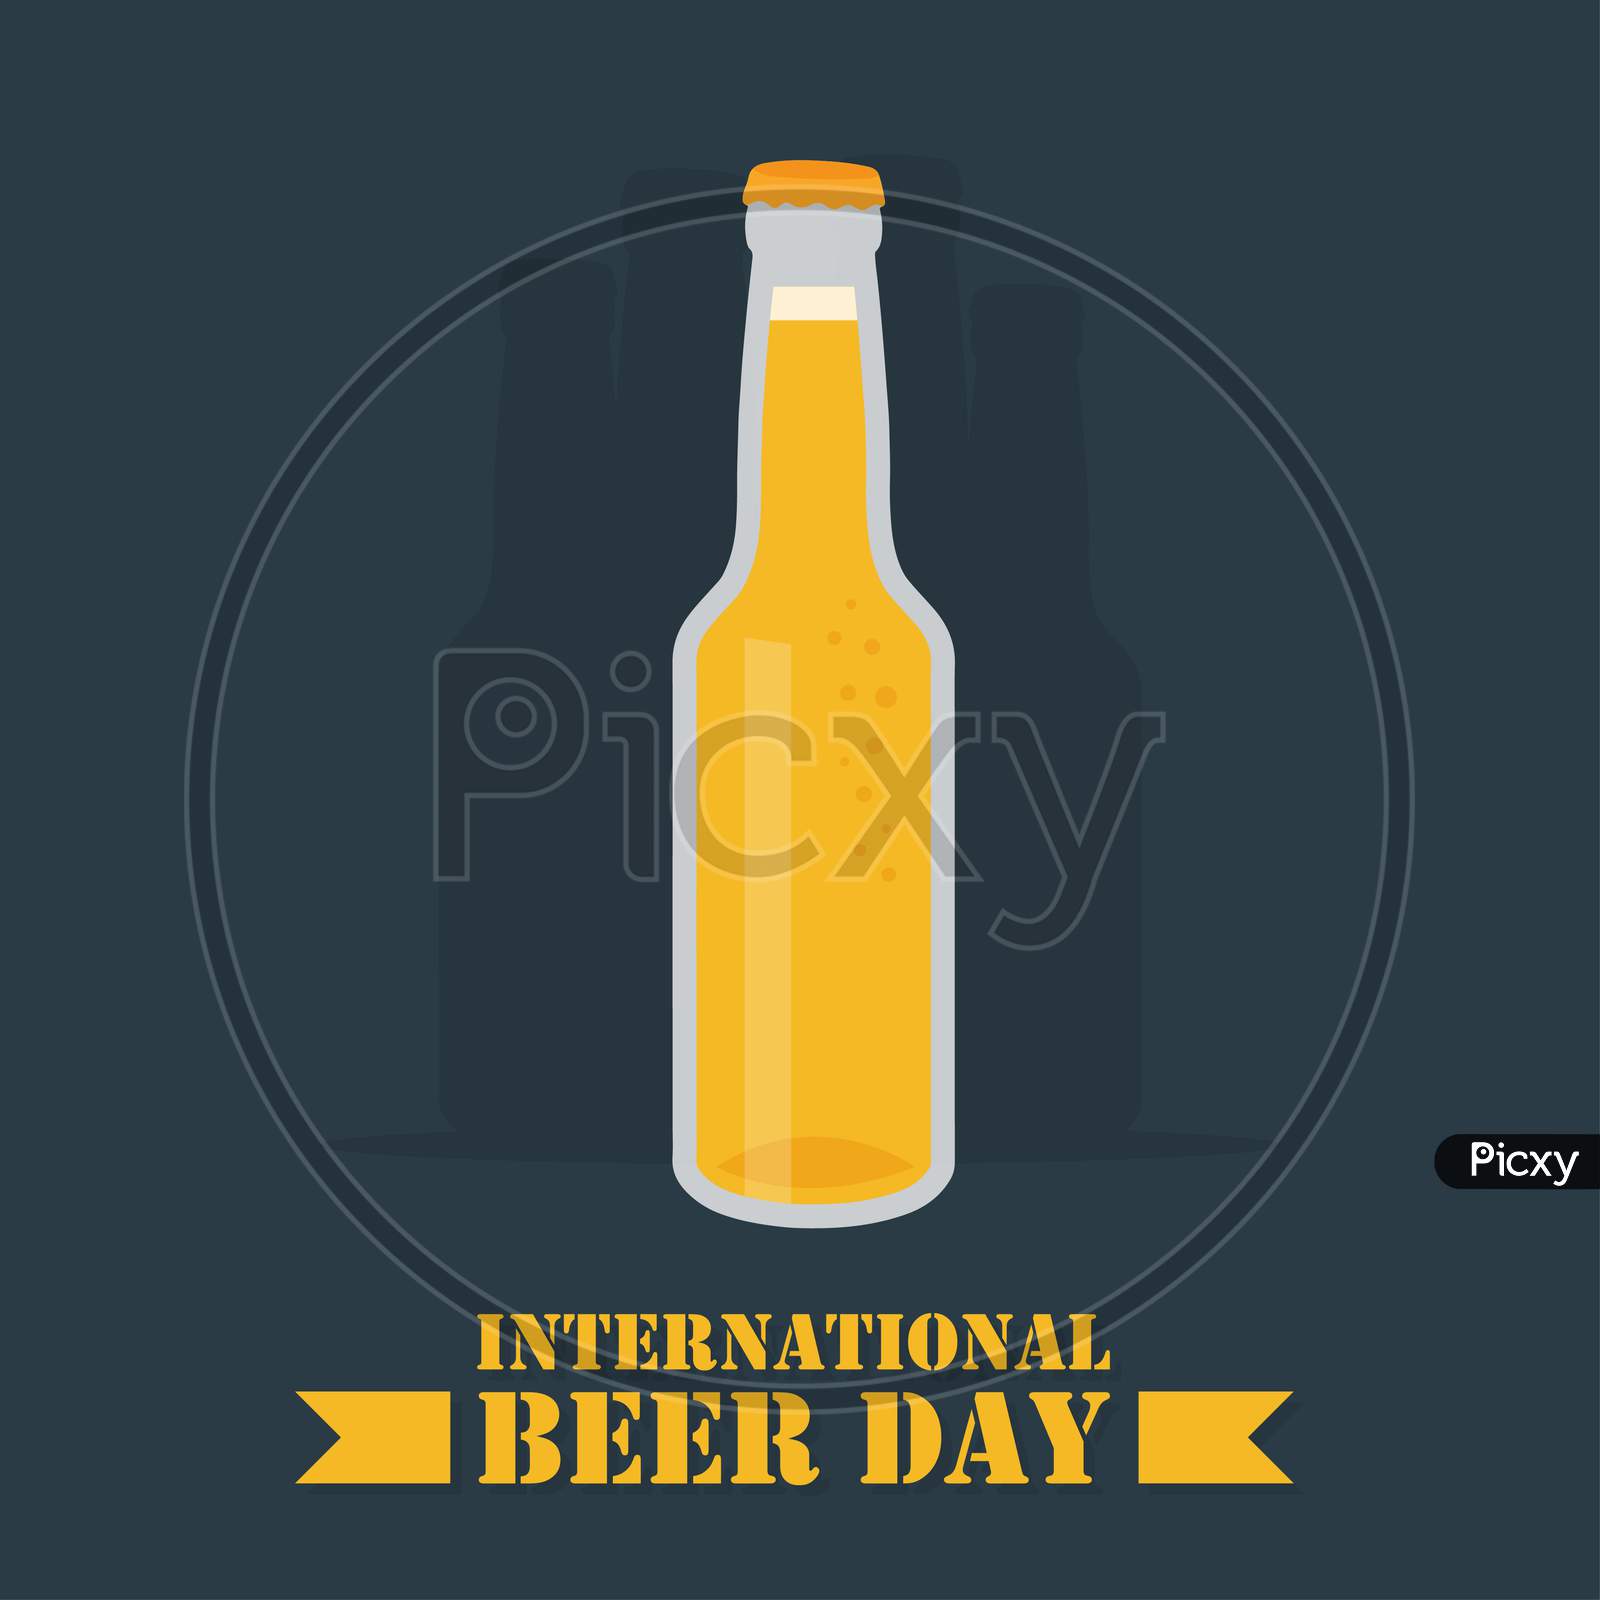 International Beer Day Poster, Beer Bottles Illustration Vector